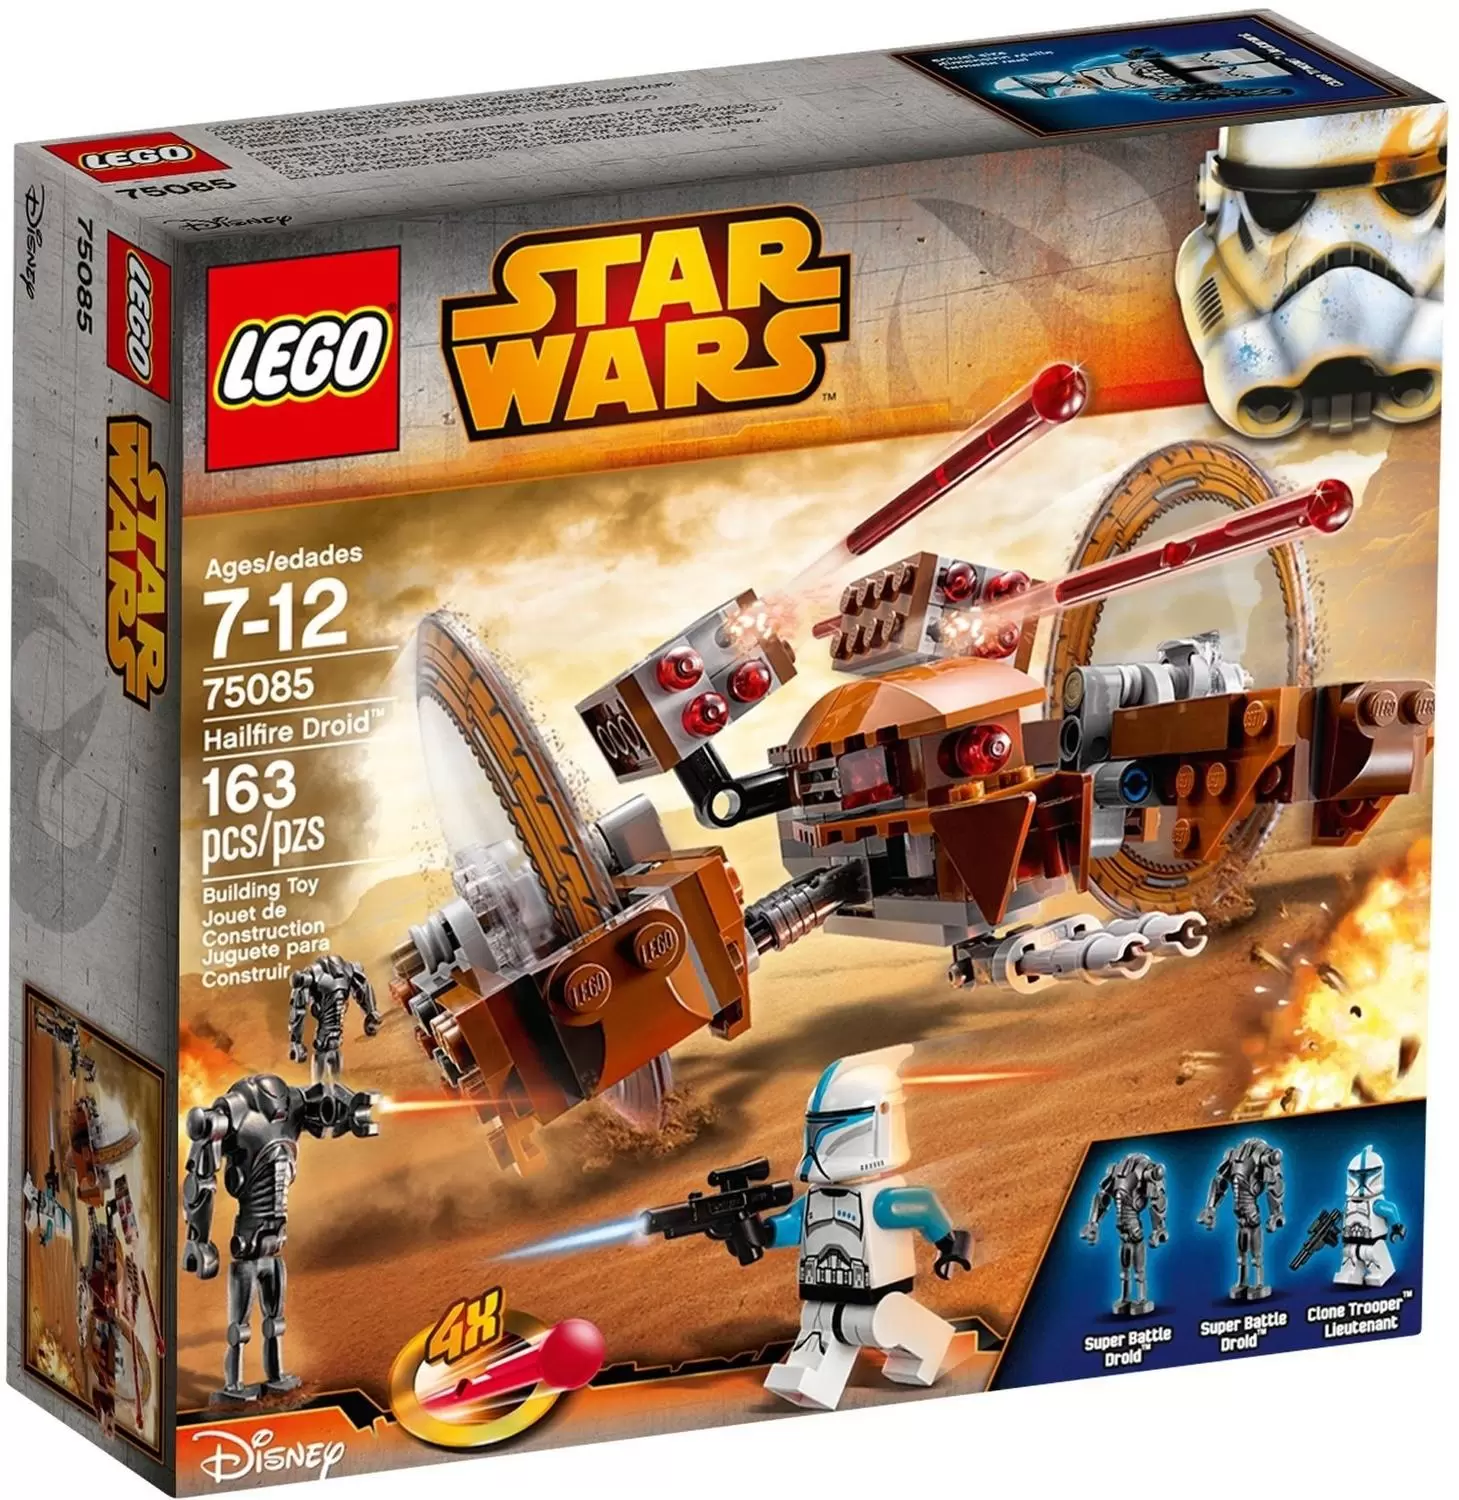 LEGO Star Wars - Hailfire Droid